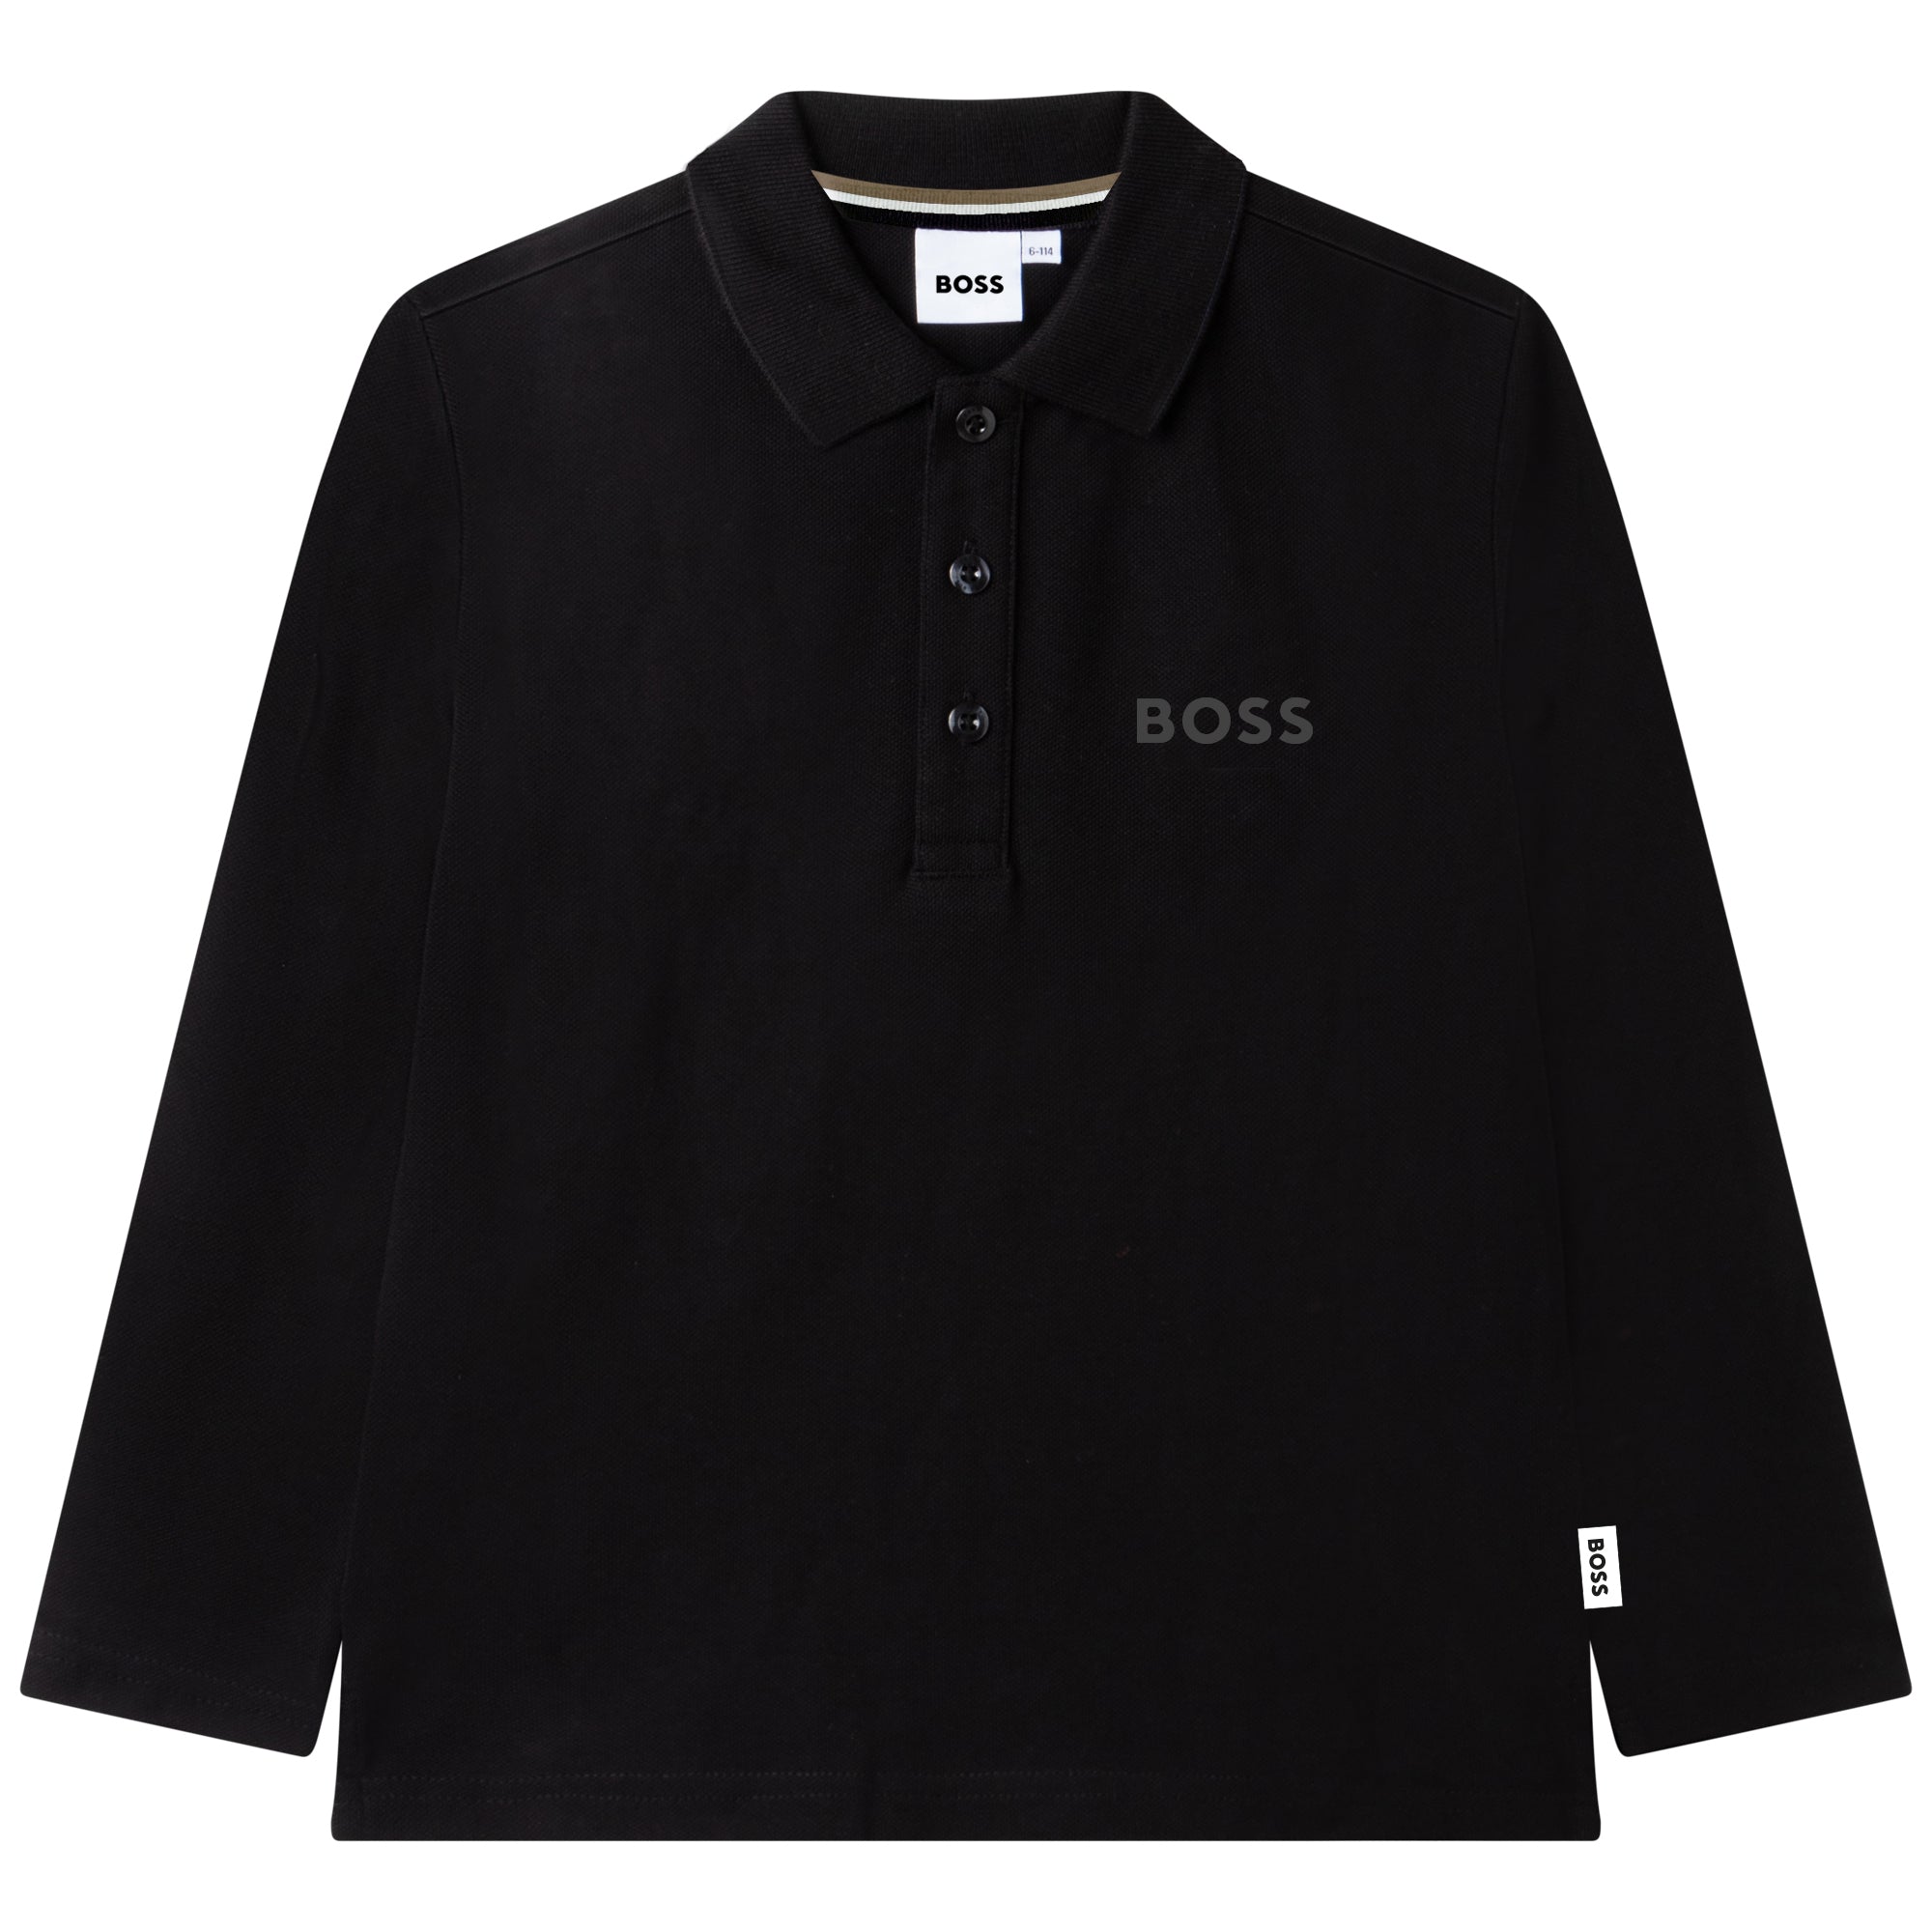 Hugo Boss Black Polo